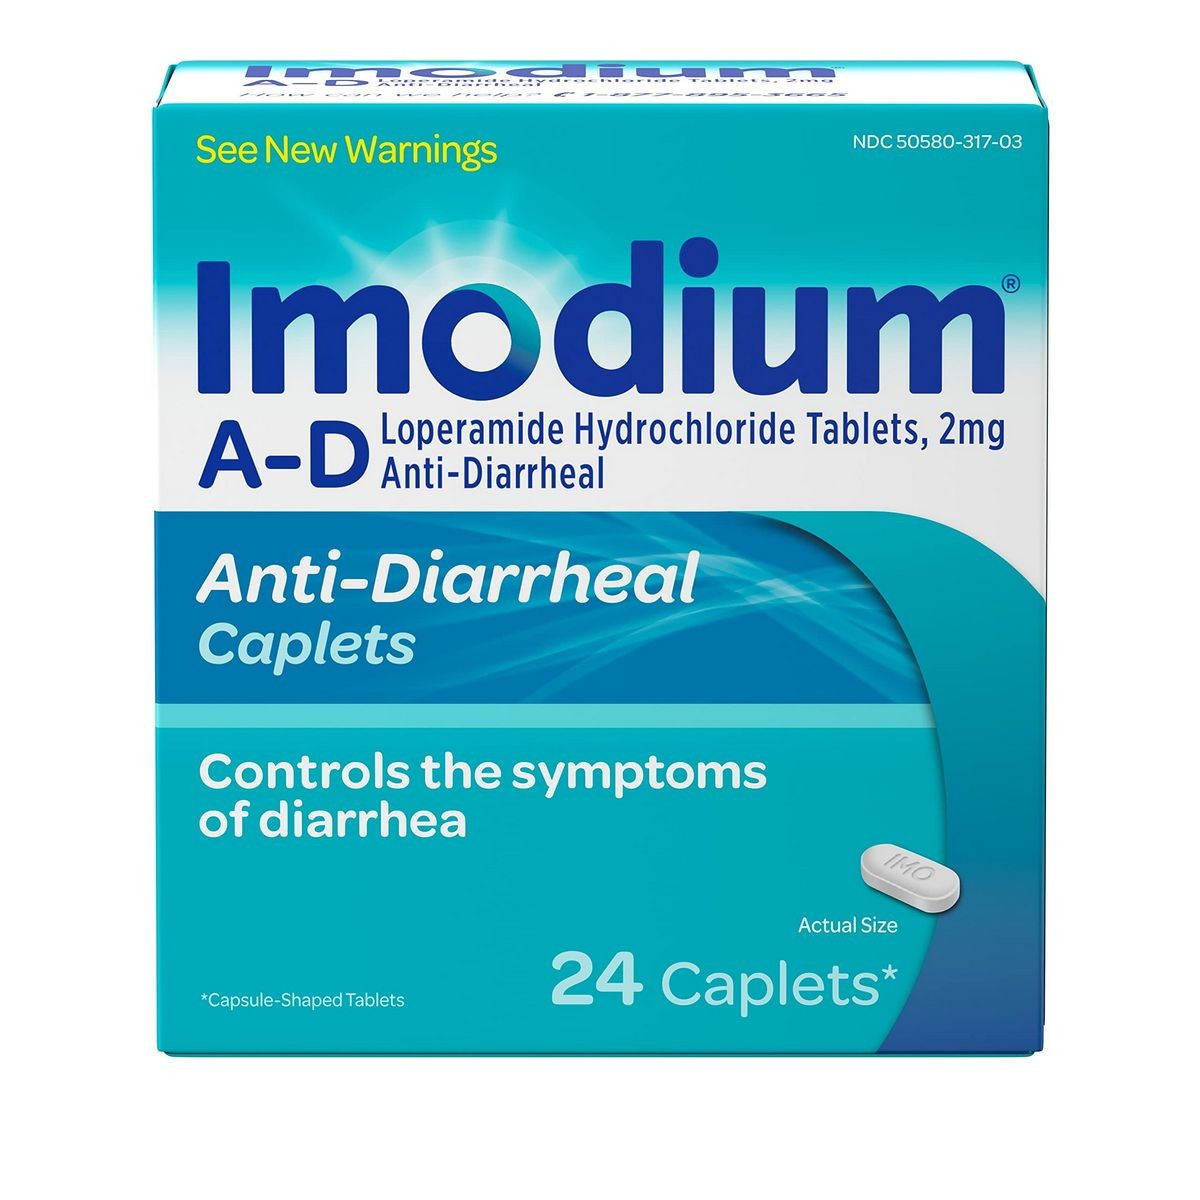 LOPERAMIDE - ORAL Imodium Kaopectate 1-D Maalox Anti-Diarrheal Pepto Diarrhea Control side effects